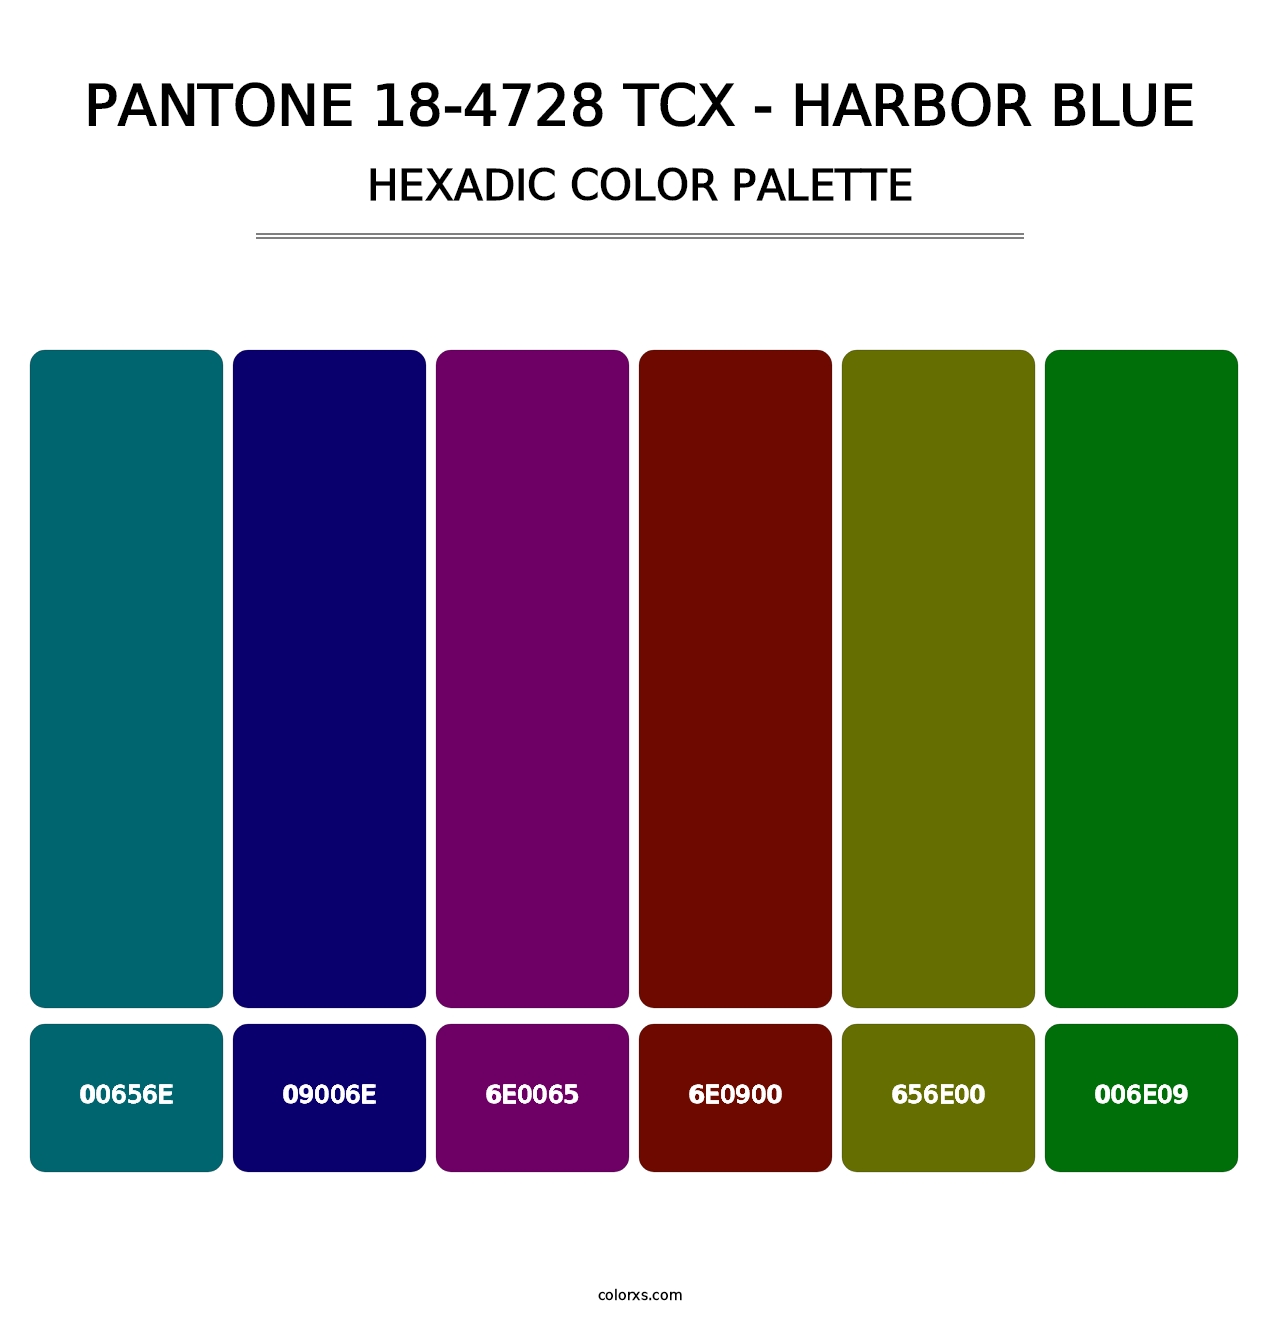 PANTONE 18-4728 TCX - Harbor Blue - Hexadic Color Palette